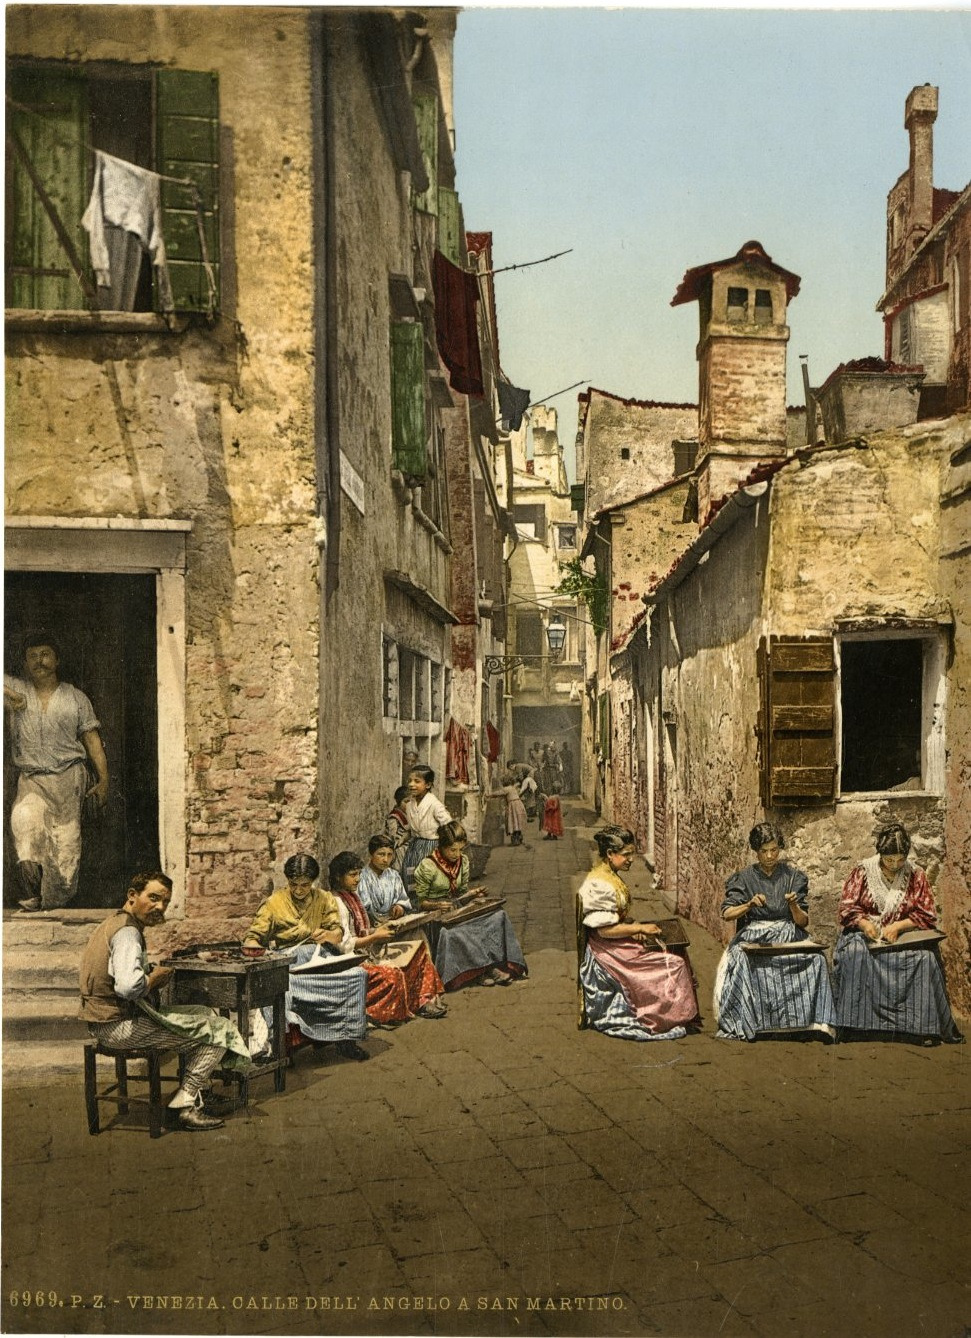 P.Z. Italy, Venezia, Calle Dell' Angelo a San Martino Vintage Print, Italy